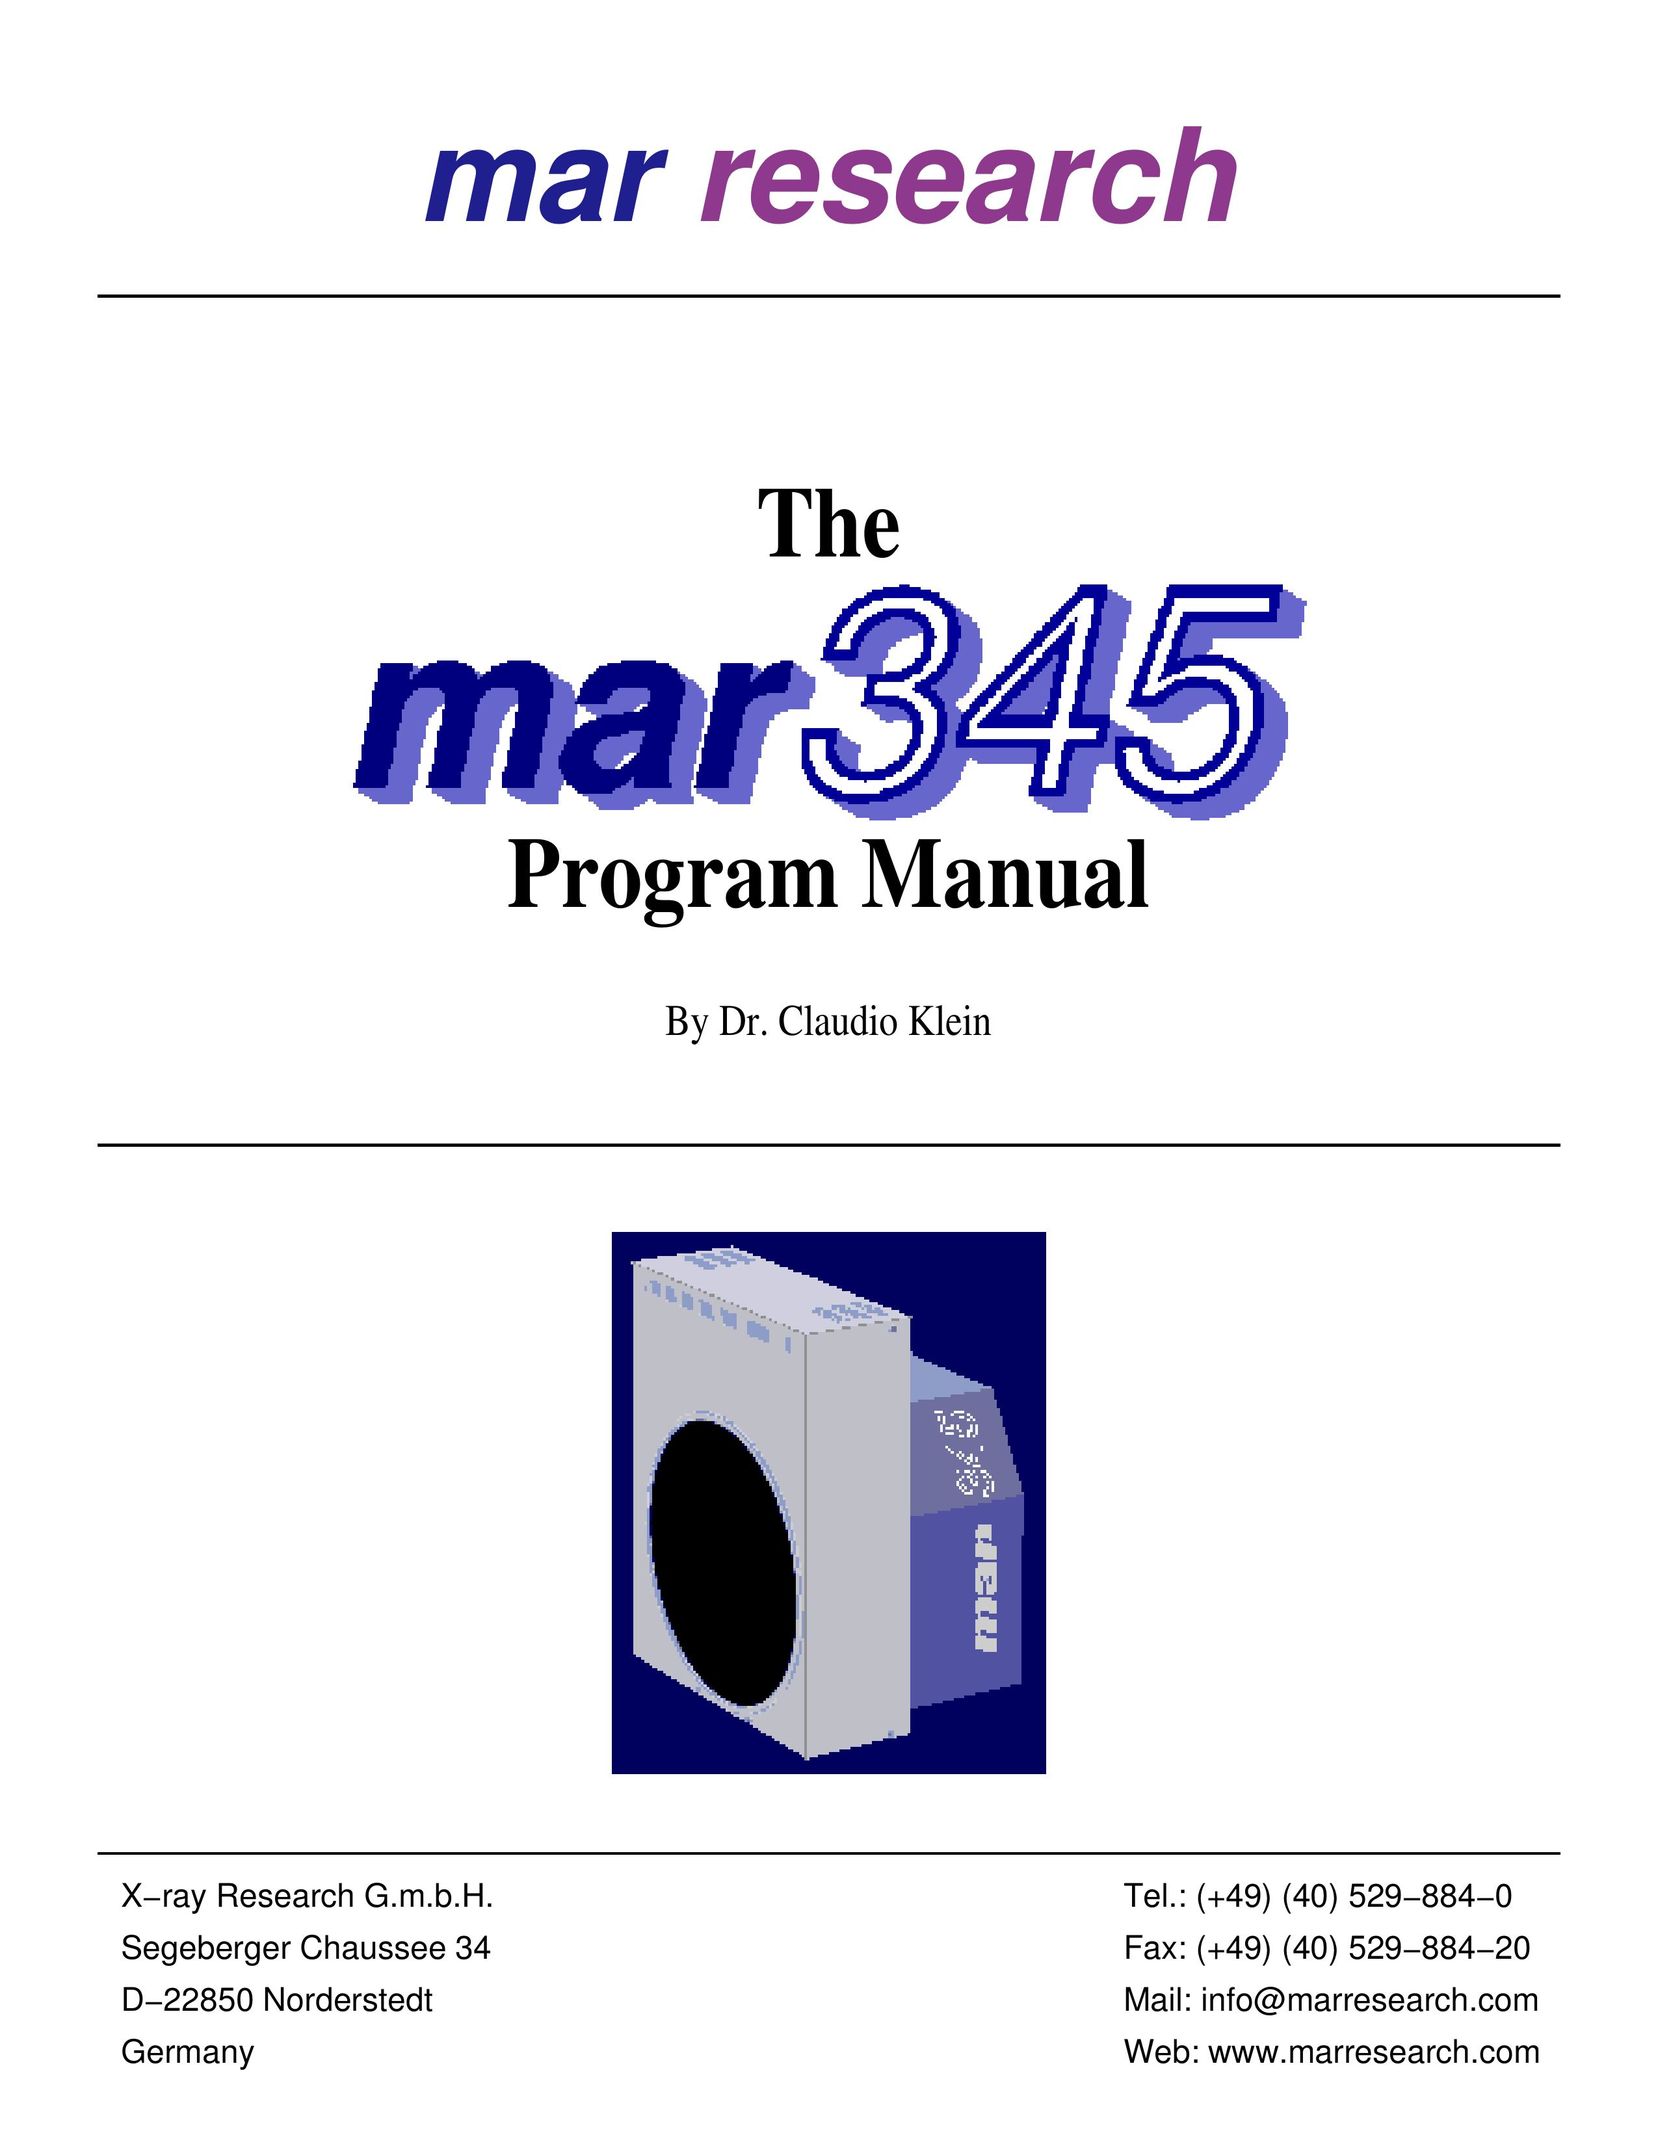 Compaq mar345 Network Router User Manual